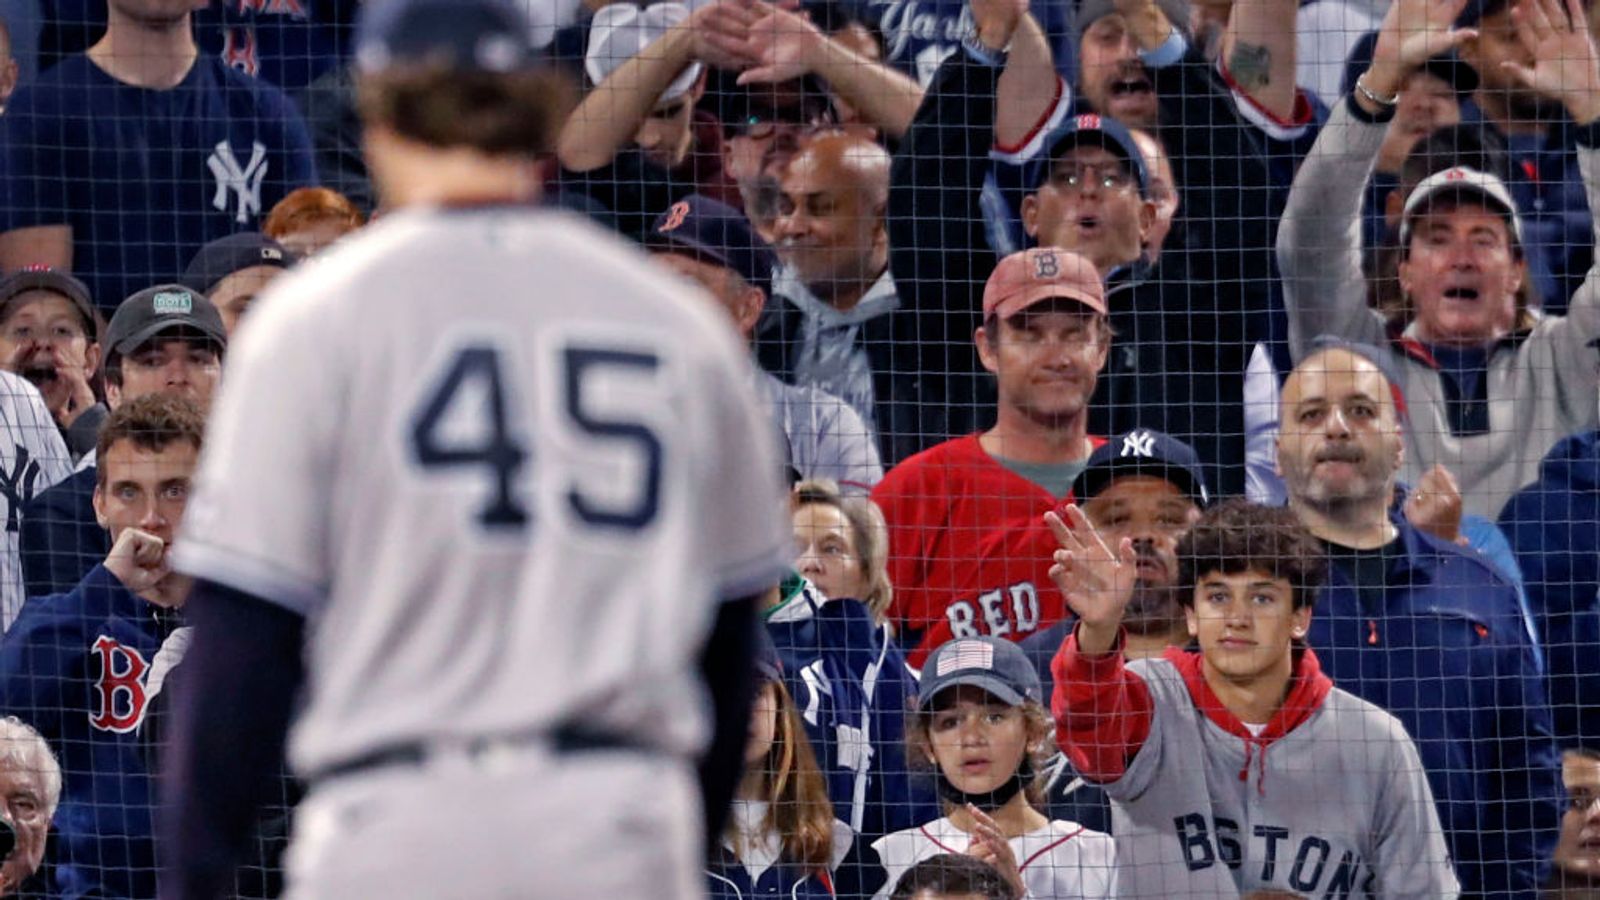 Nathan Eovaldi: 'Just unbelievable' having Red Sox fans back at Fenway Park